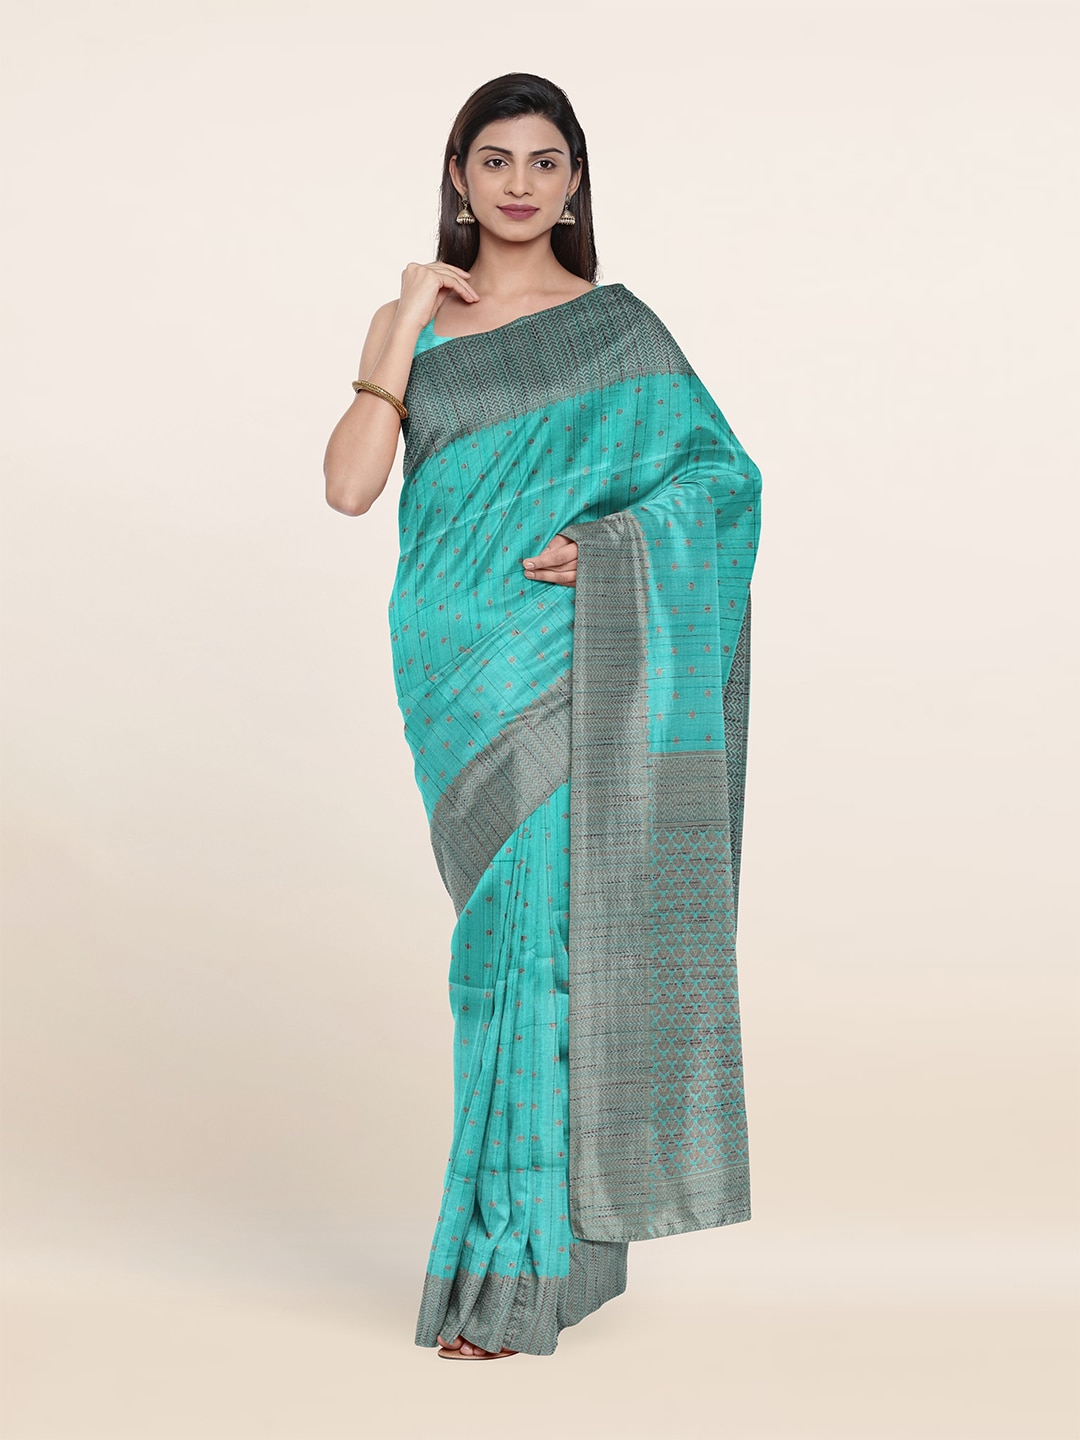 Pothys Blue Woven Design Art Silk Saree Price in India